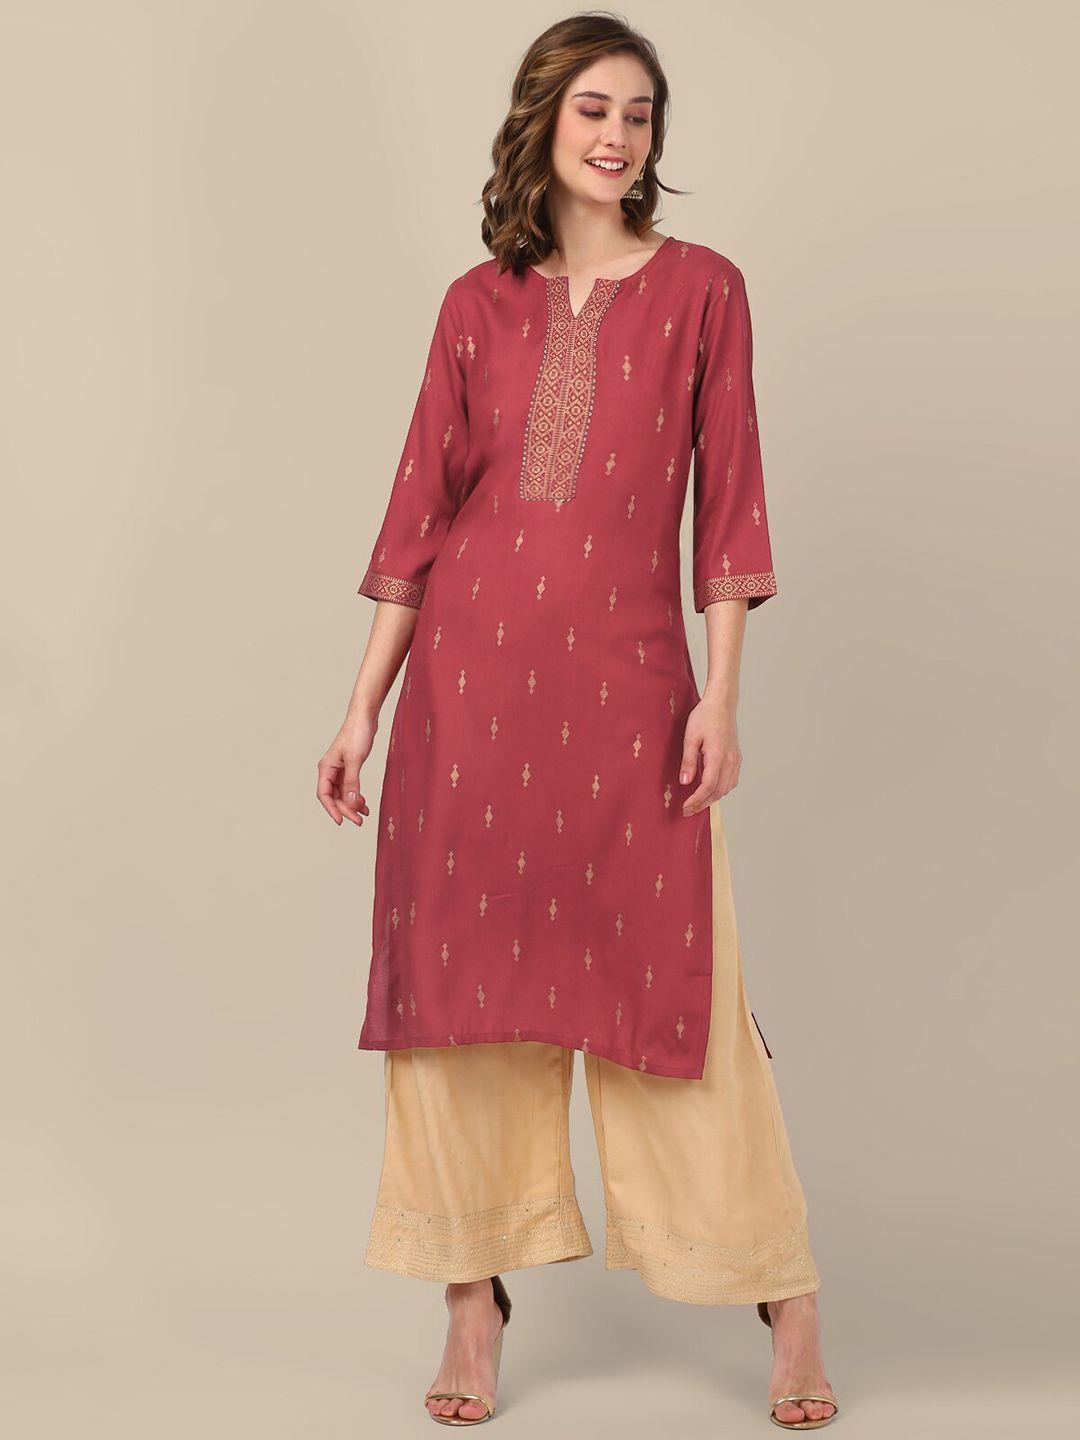 rangita women maroon ethnic motifs embellished kurta